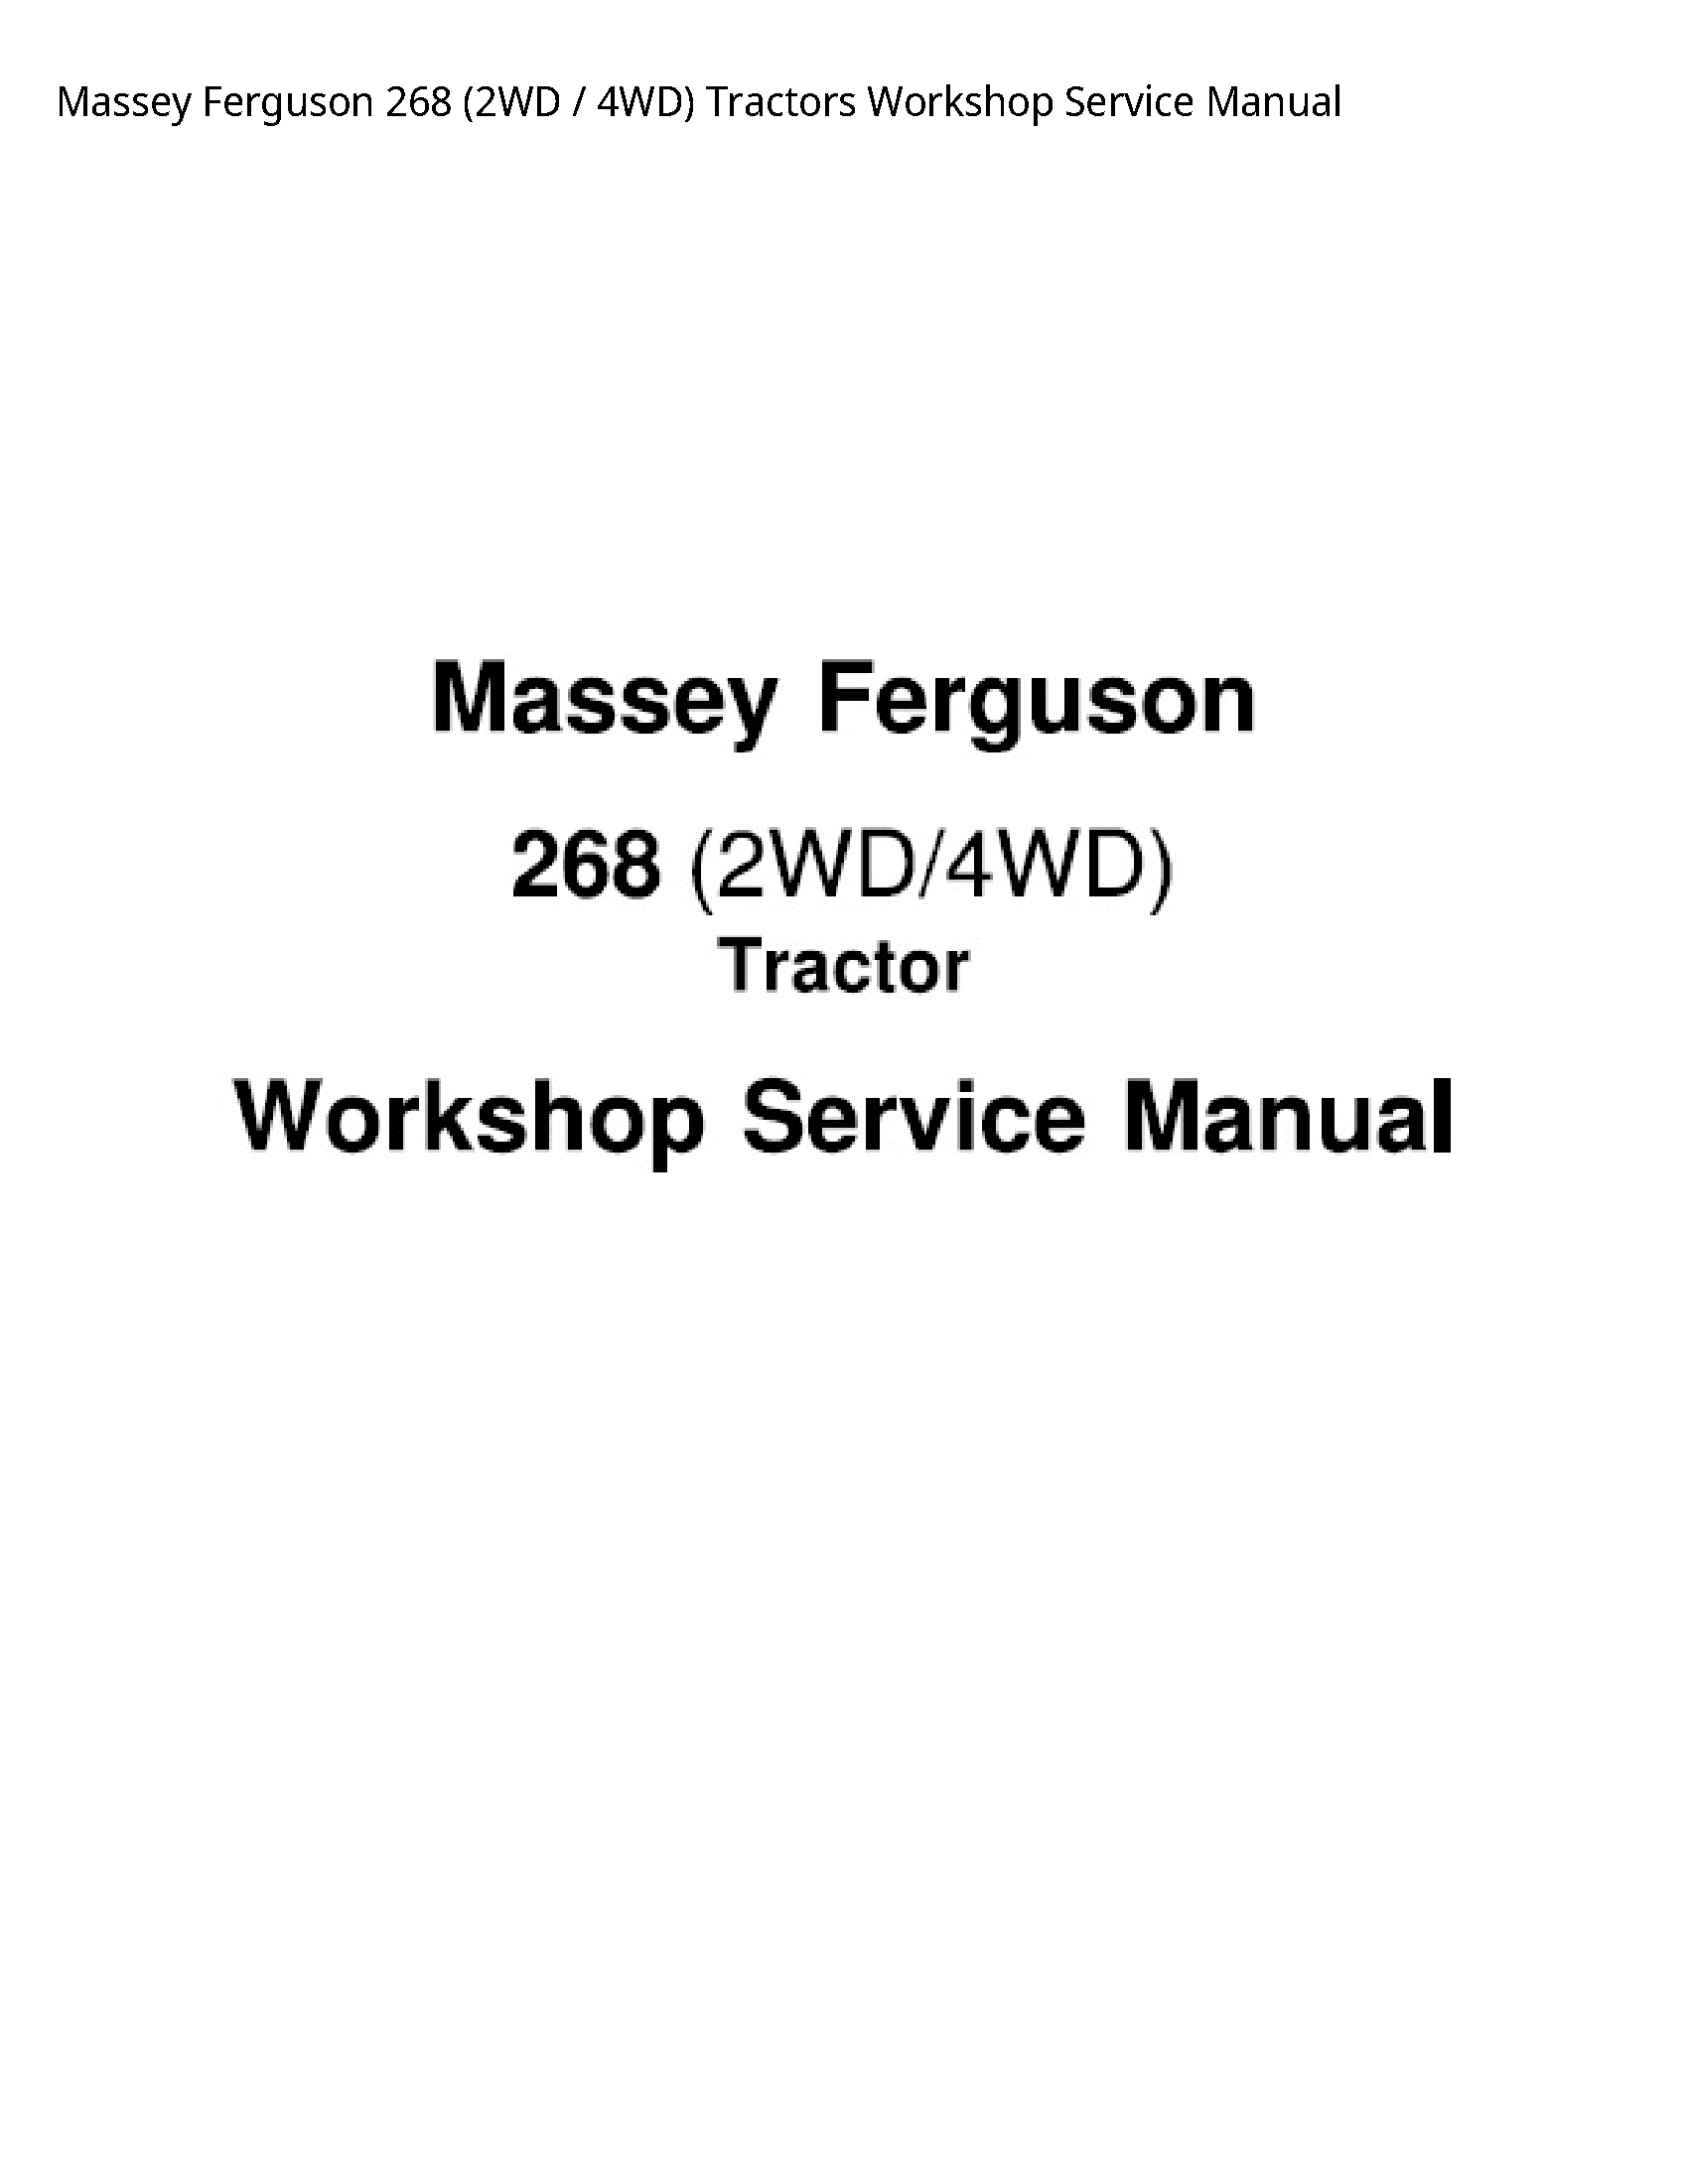 Massey Ferguson 268 Tractors Service manual